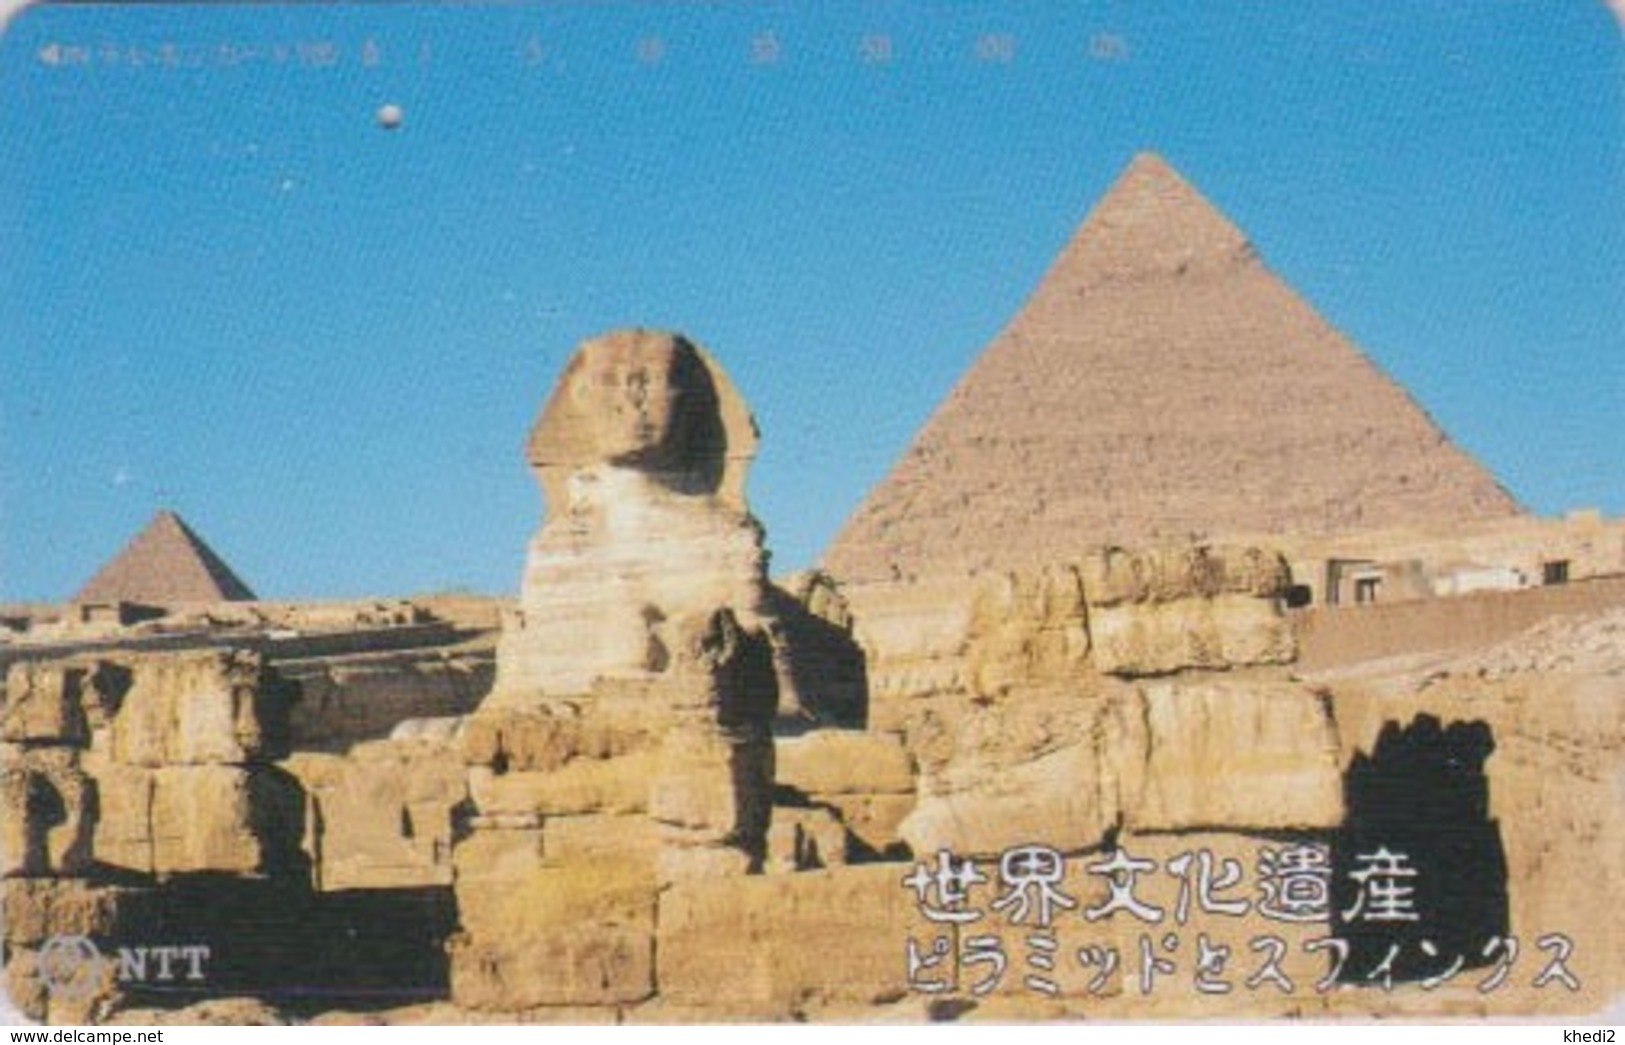 Télécarte JAPON / NTT 331-452 B ** ONE PUNCH ** - Site EGYPTE - PYRAMIDE & SPHINX - EGYPT Related JAPAN Phonecard - 202 - Japan